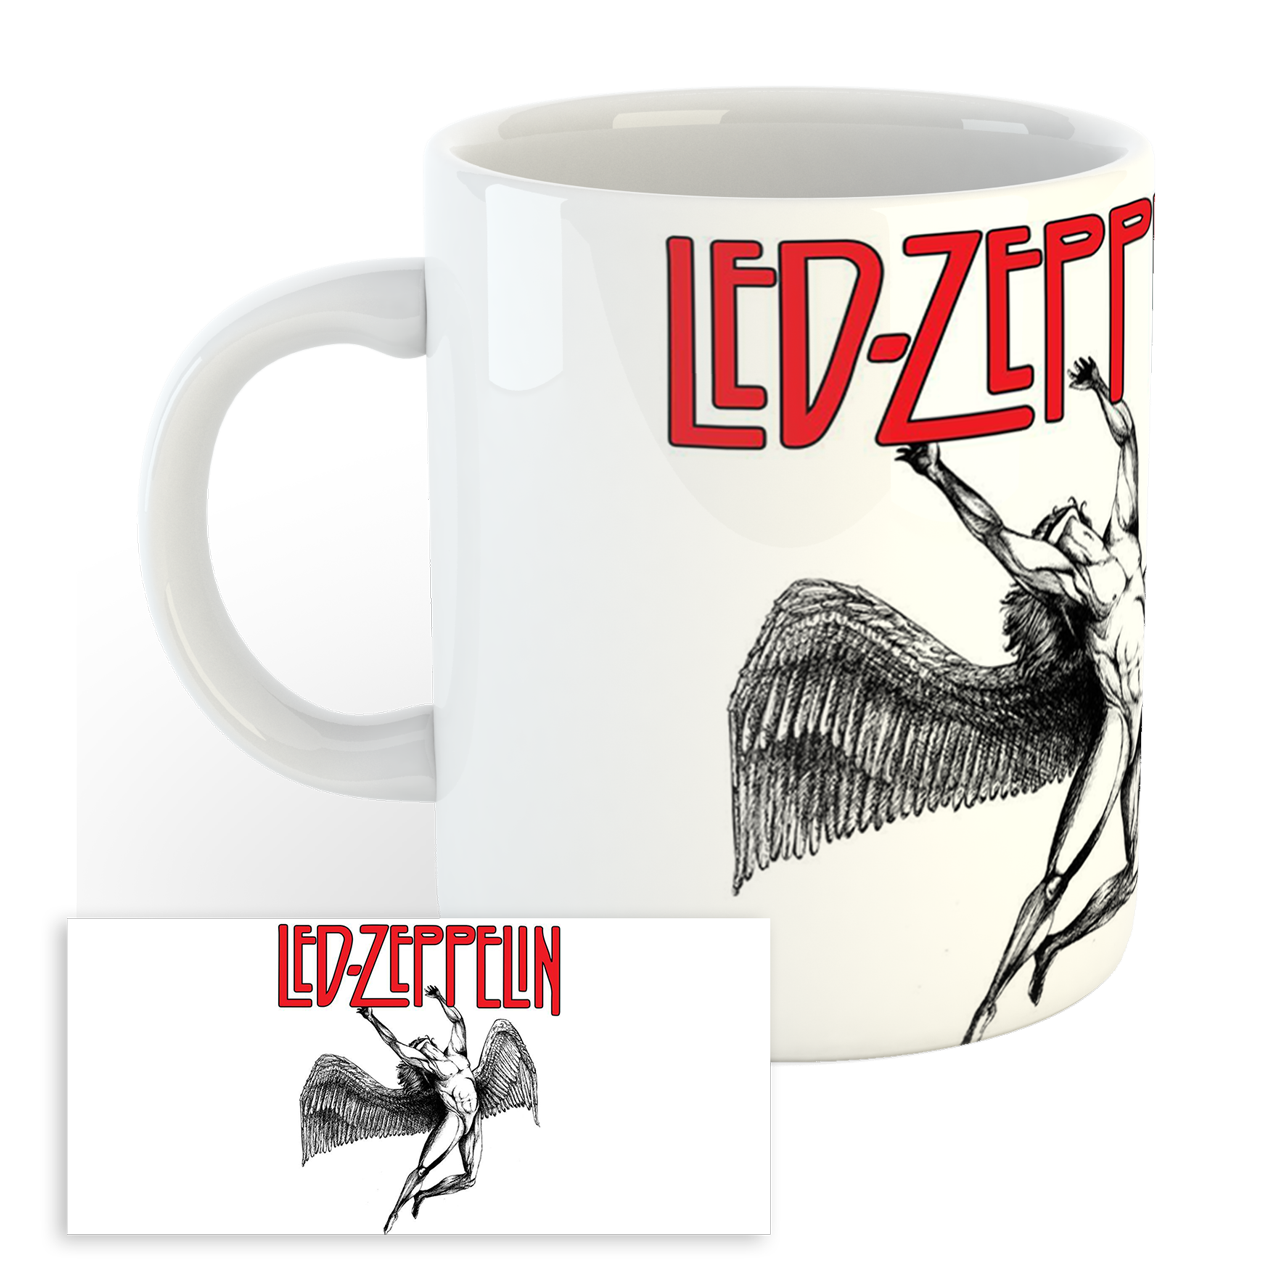 Tazza Mug - Led Zeppelin